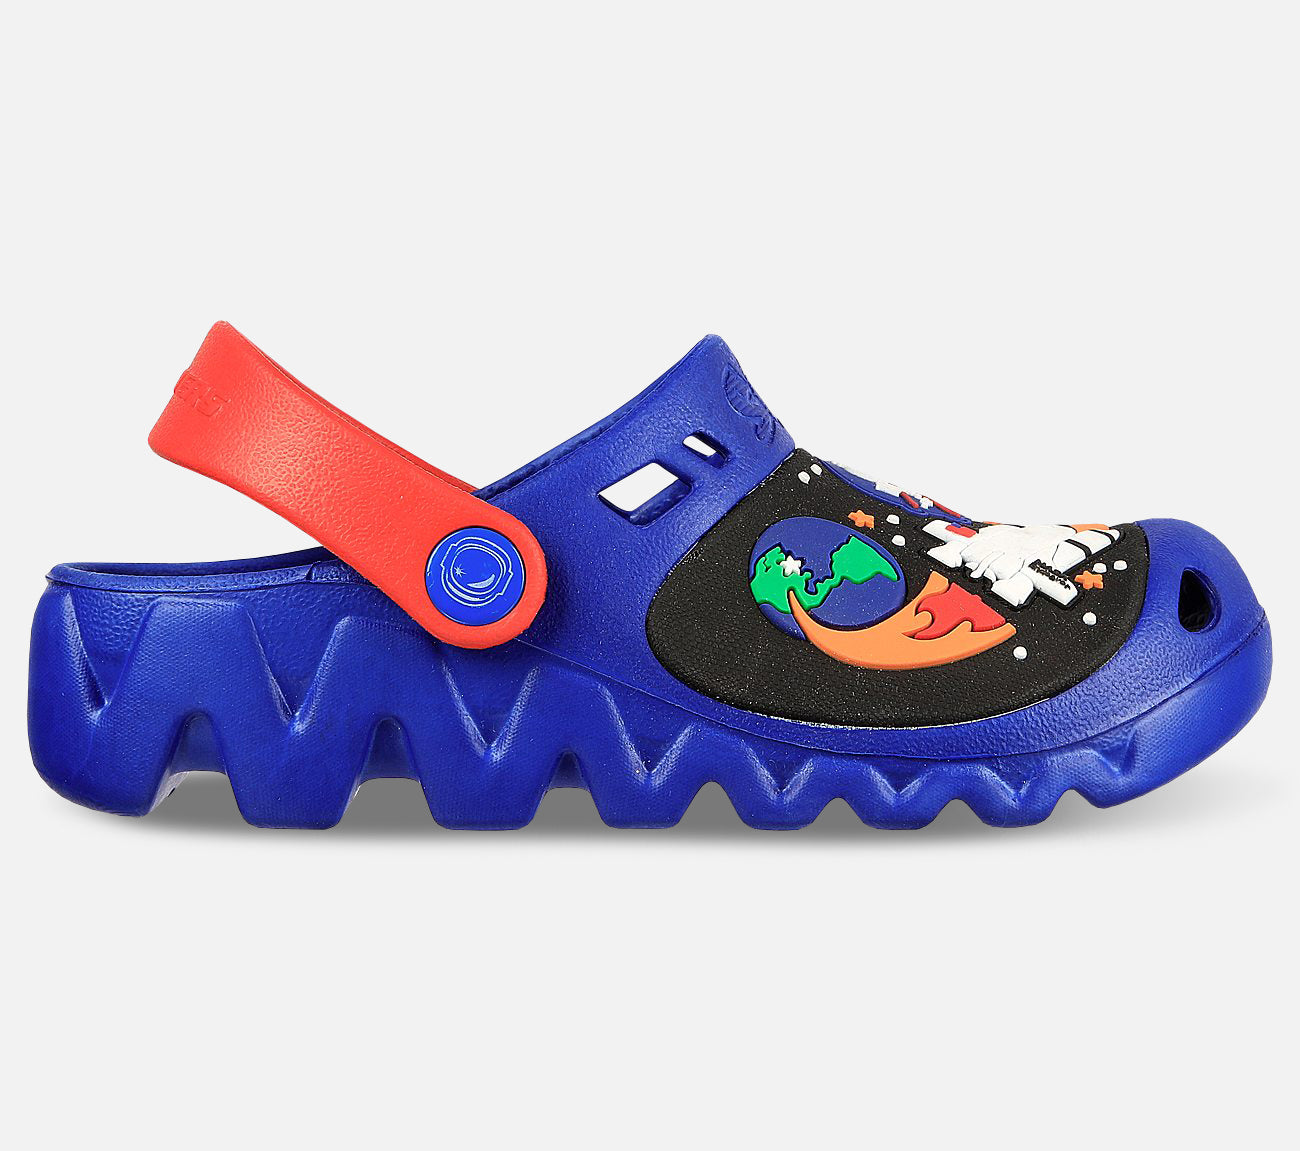 Zaggle - Nebuloid Shoe Skechers